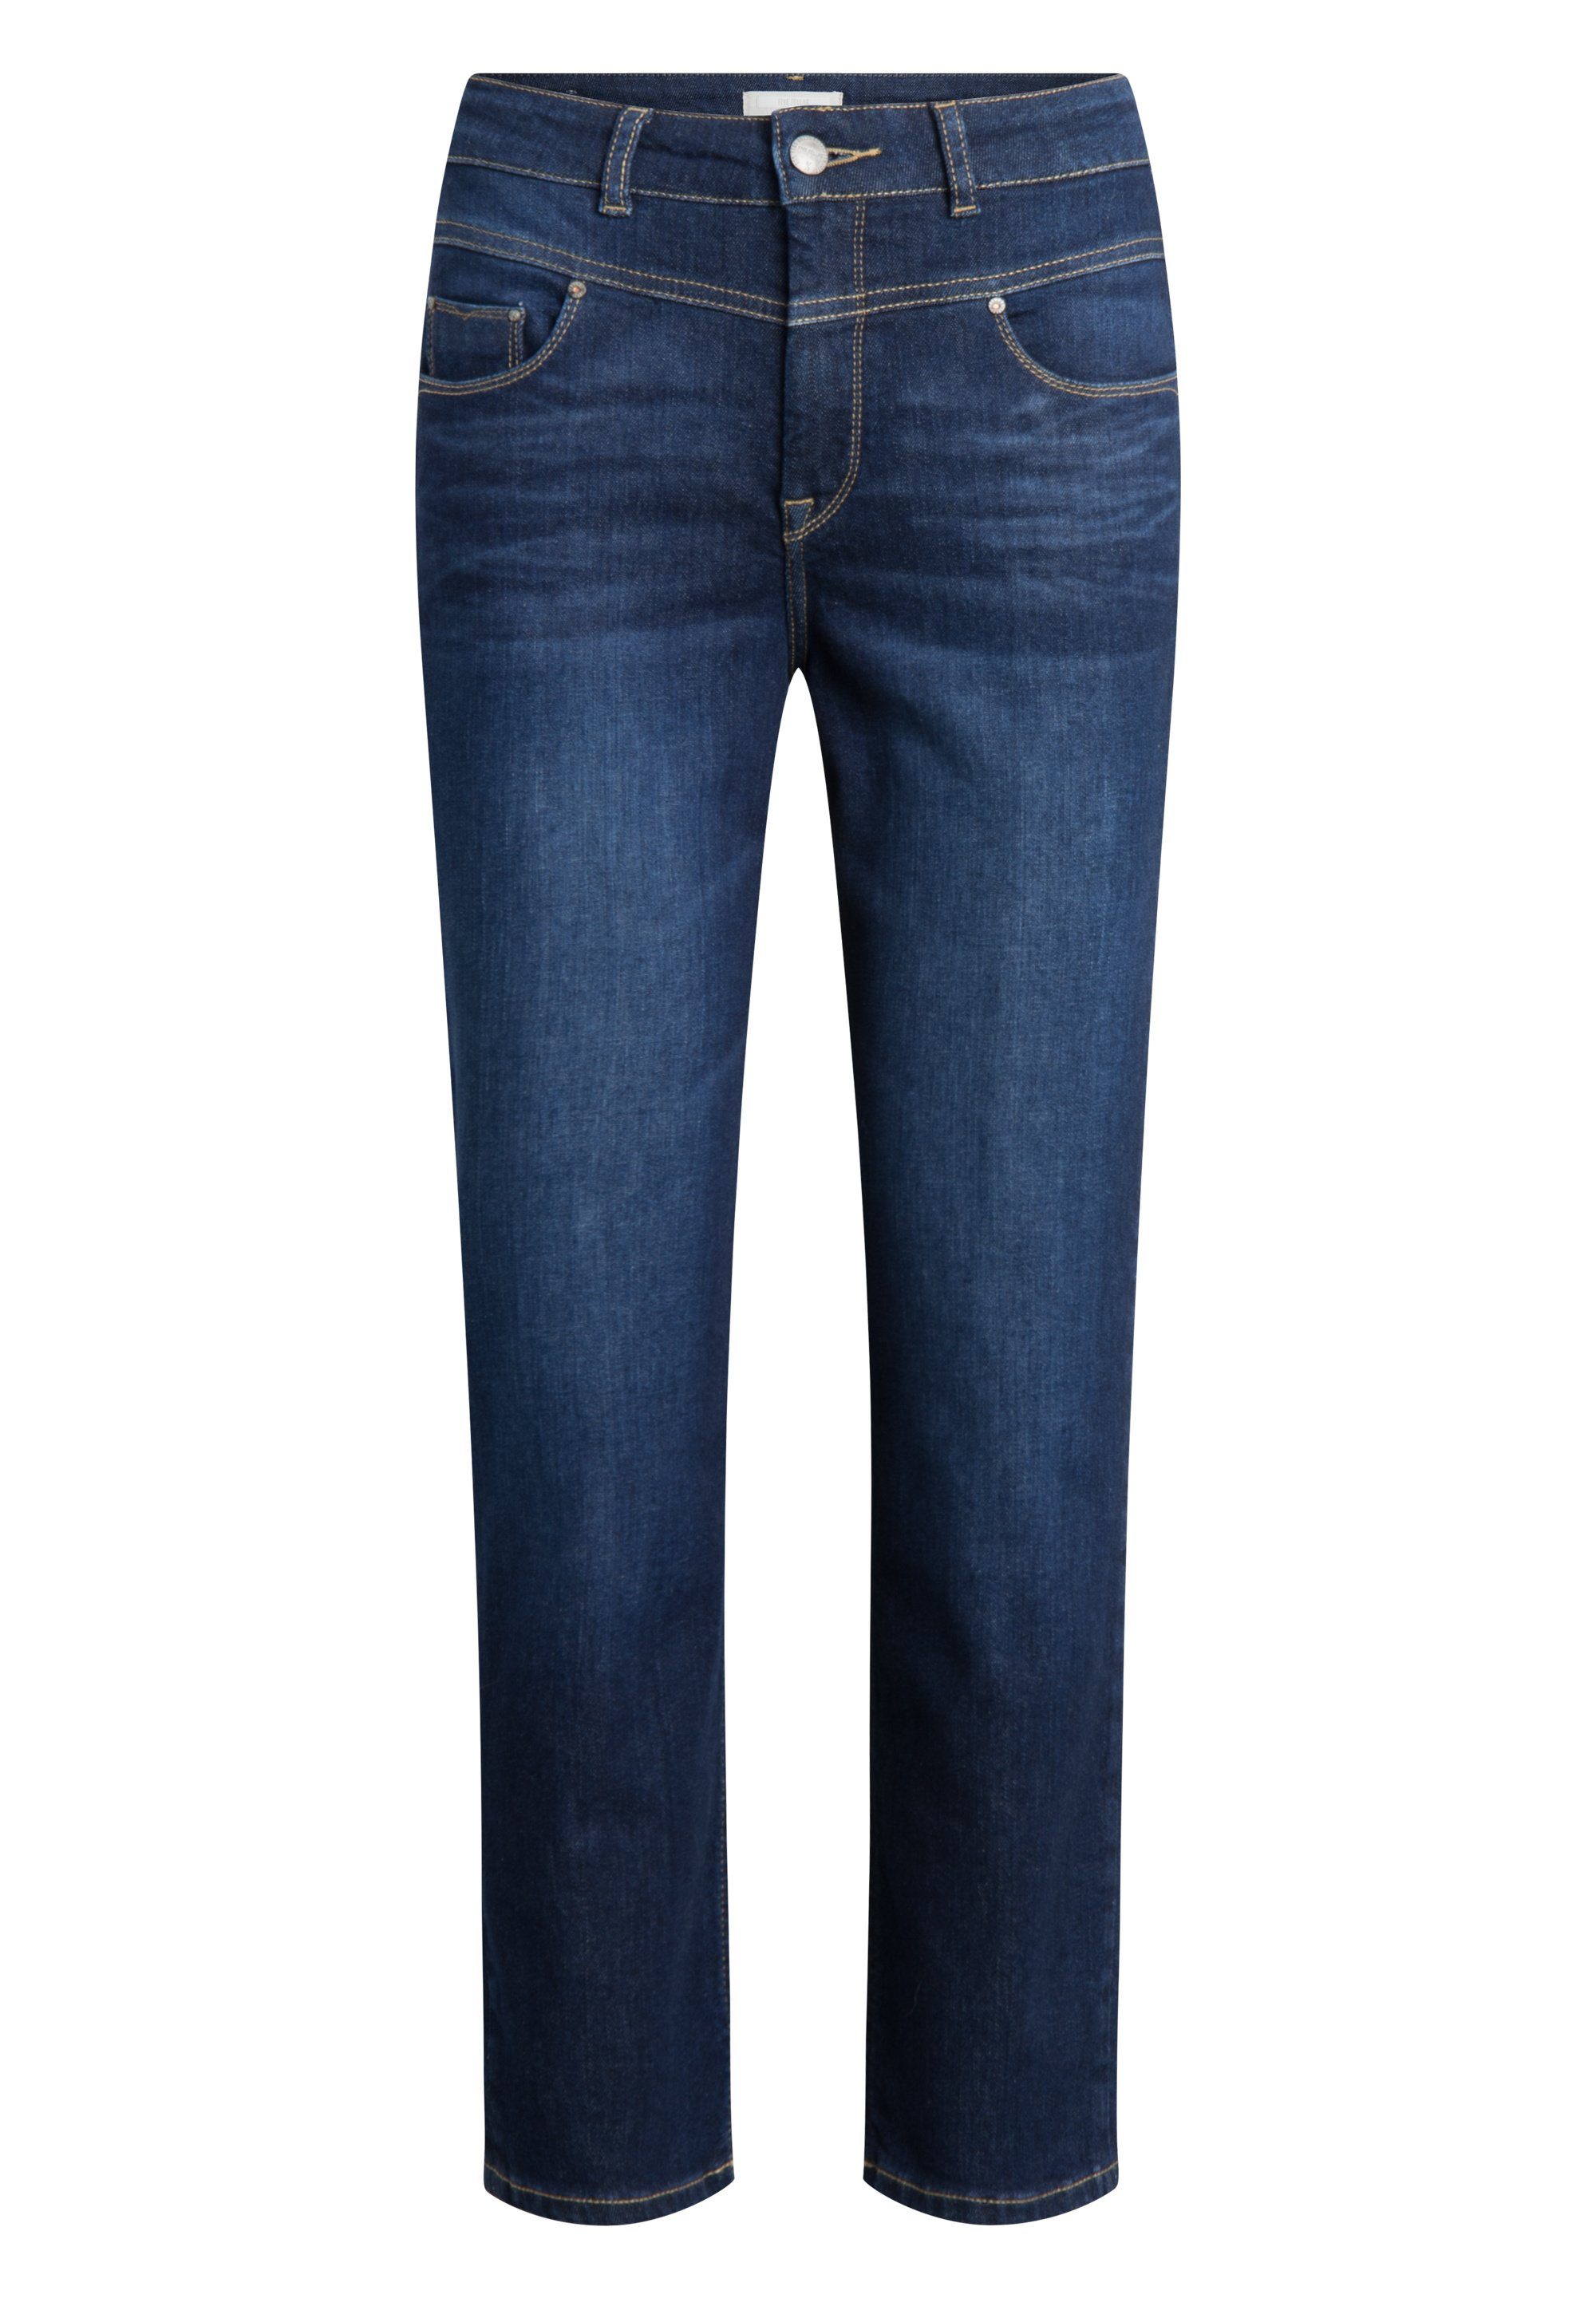 FIVE FELLAS 7/8-Jeans 513-12M Italien, Stretch EMILIE nachhaltig, blau